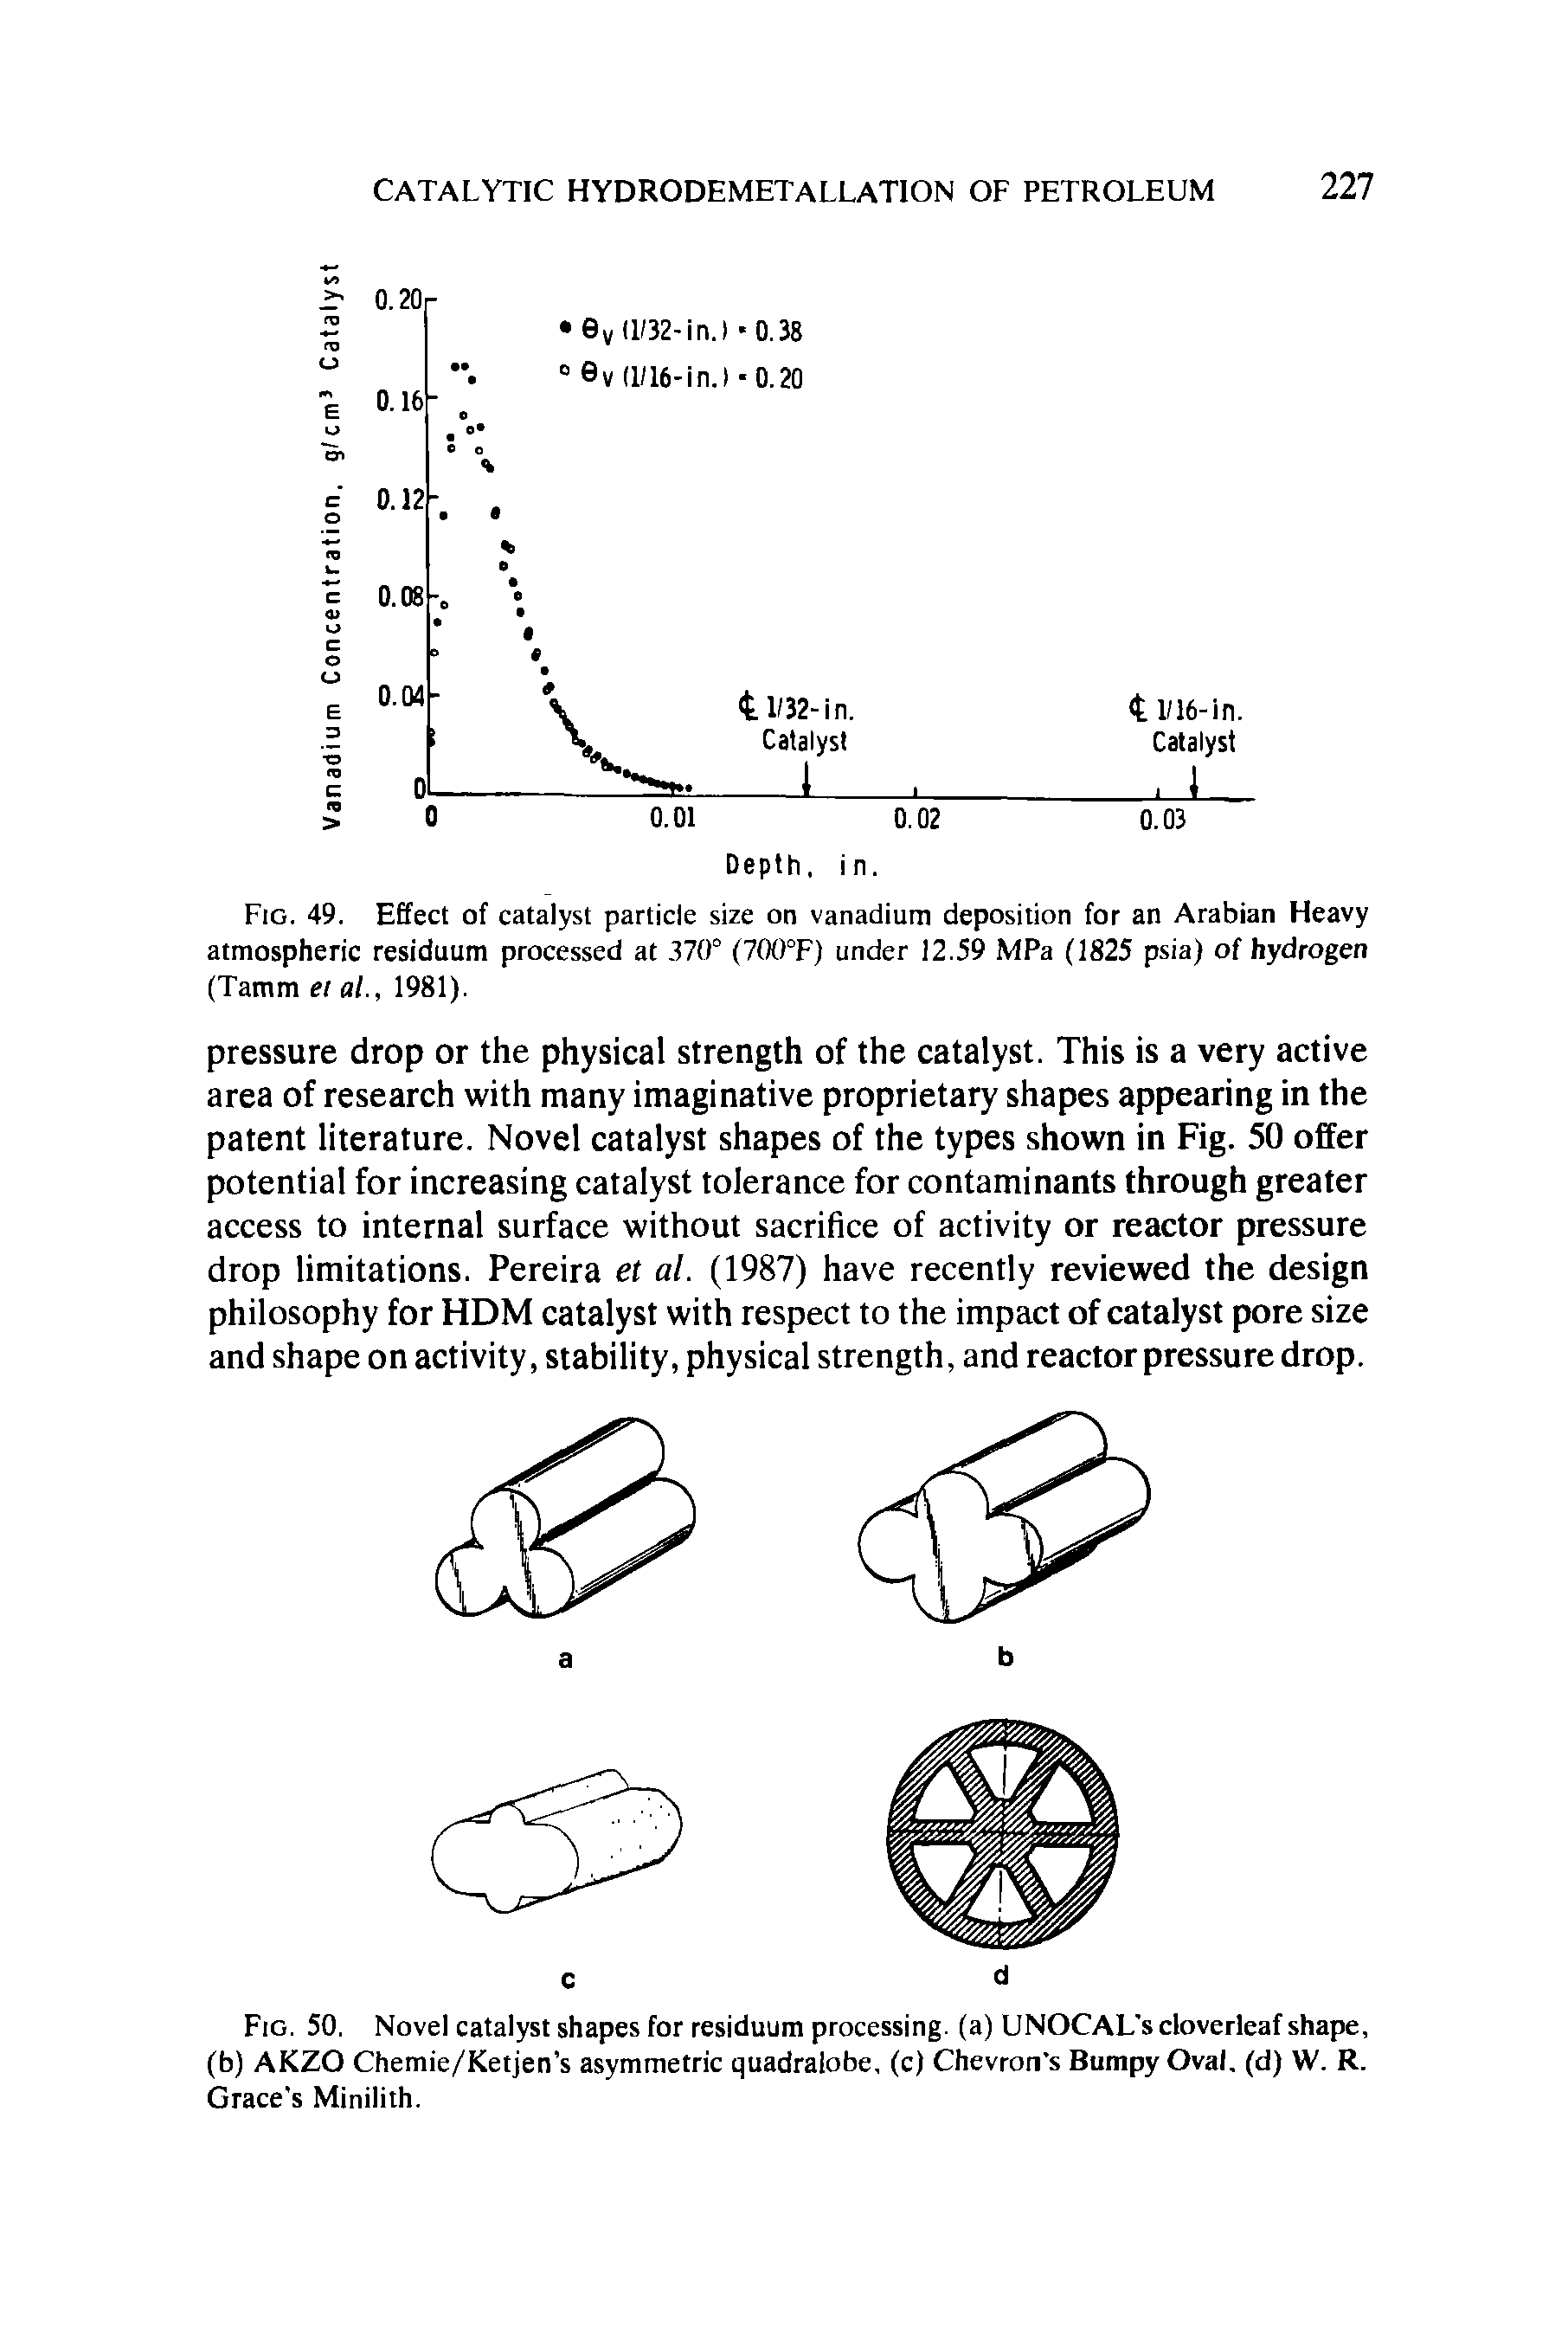 Fig. 50. Novel catalyst shapes for residuum processing, (a) UNOCAL s cloverleaf shape, (b) AKZO Chemie/Ketjen s asymmetric quadralobe, (c) Chevron s Bumpy Oval, (d) W. R. Grace s Minilith.